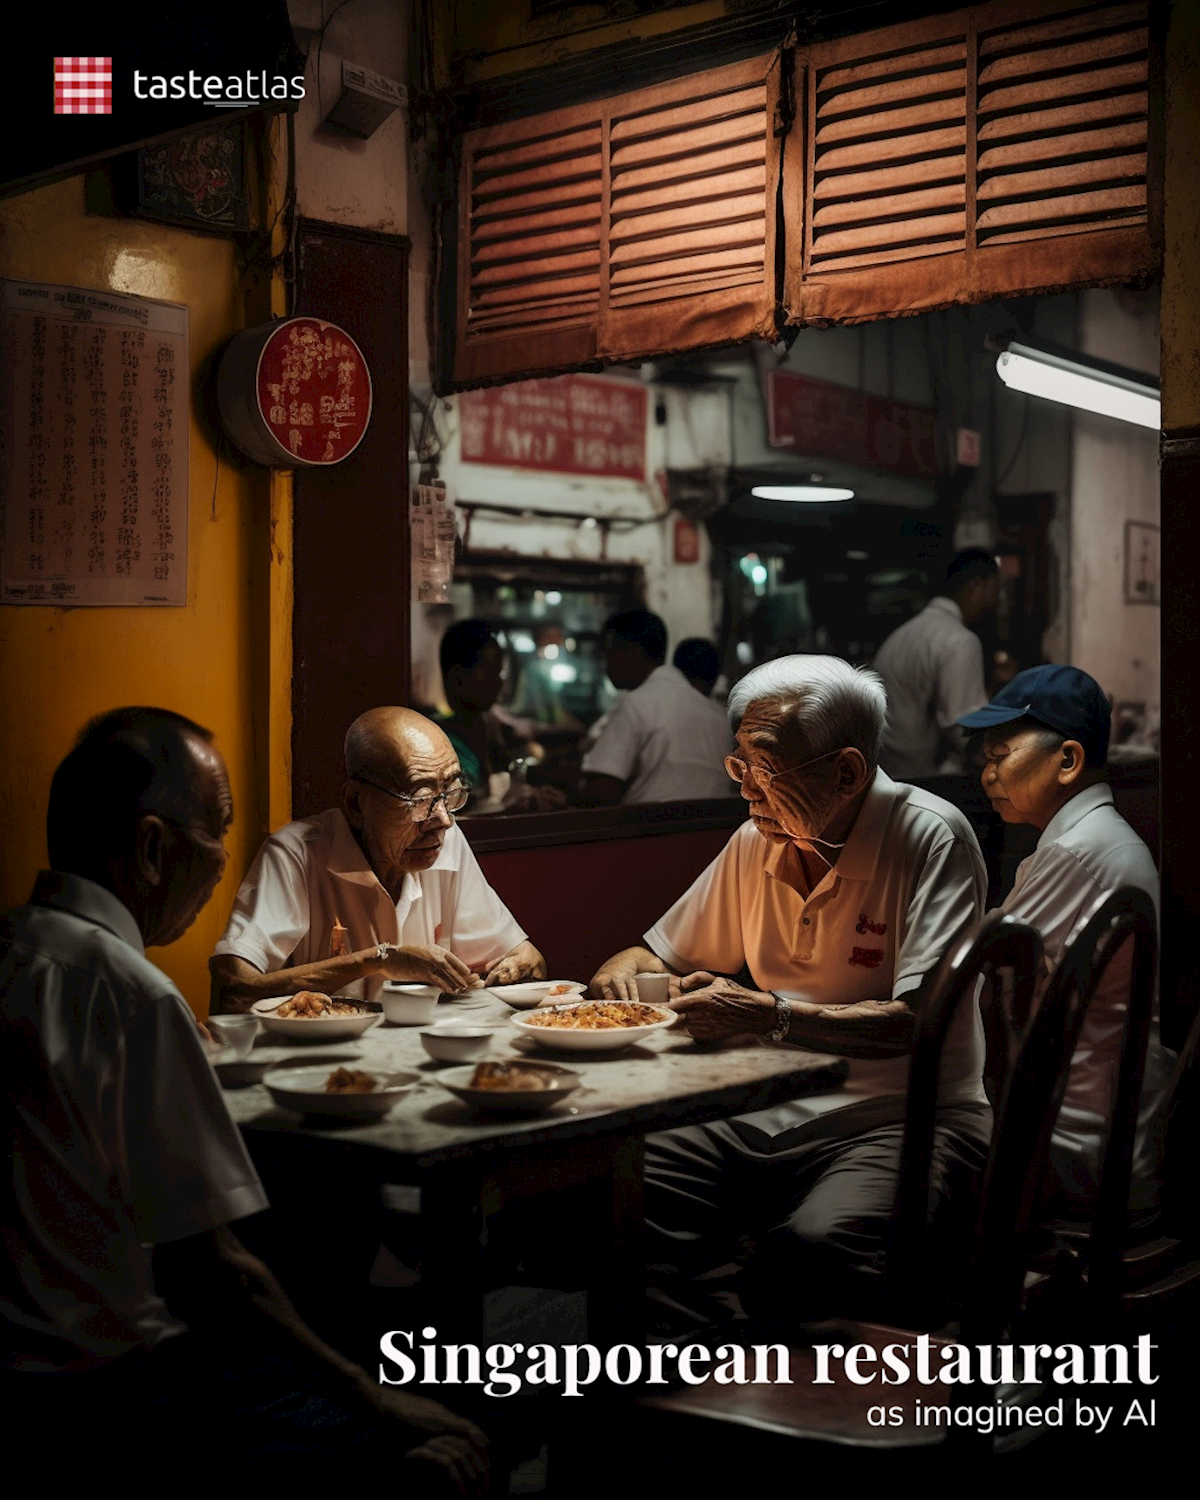 Prompt: Imagine locals eating in a traditional Singaporean restaurant